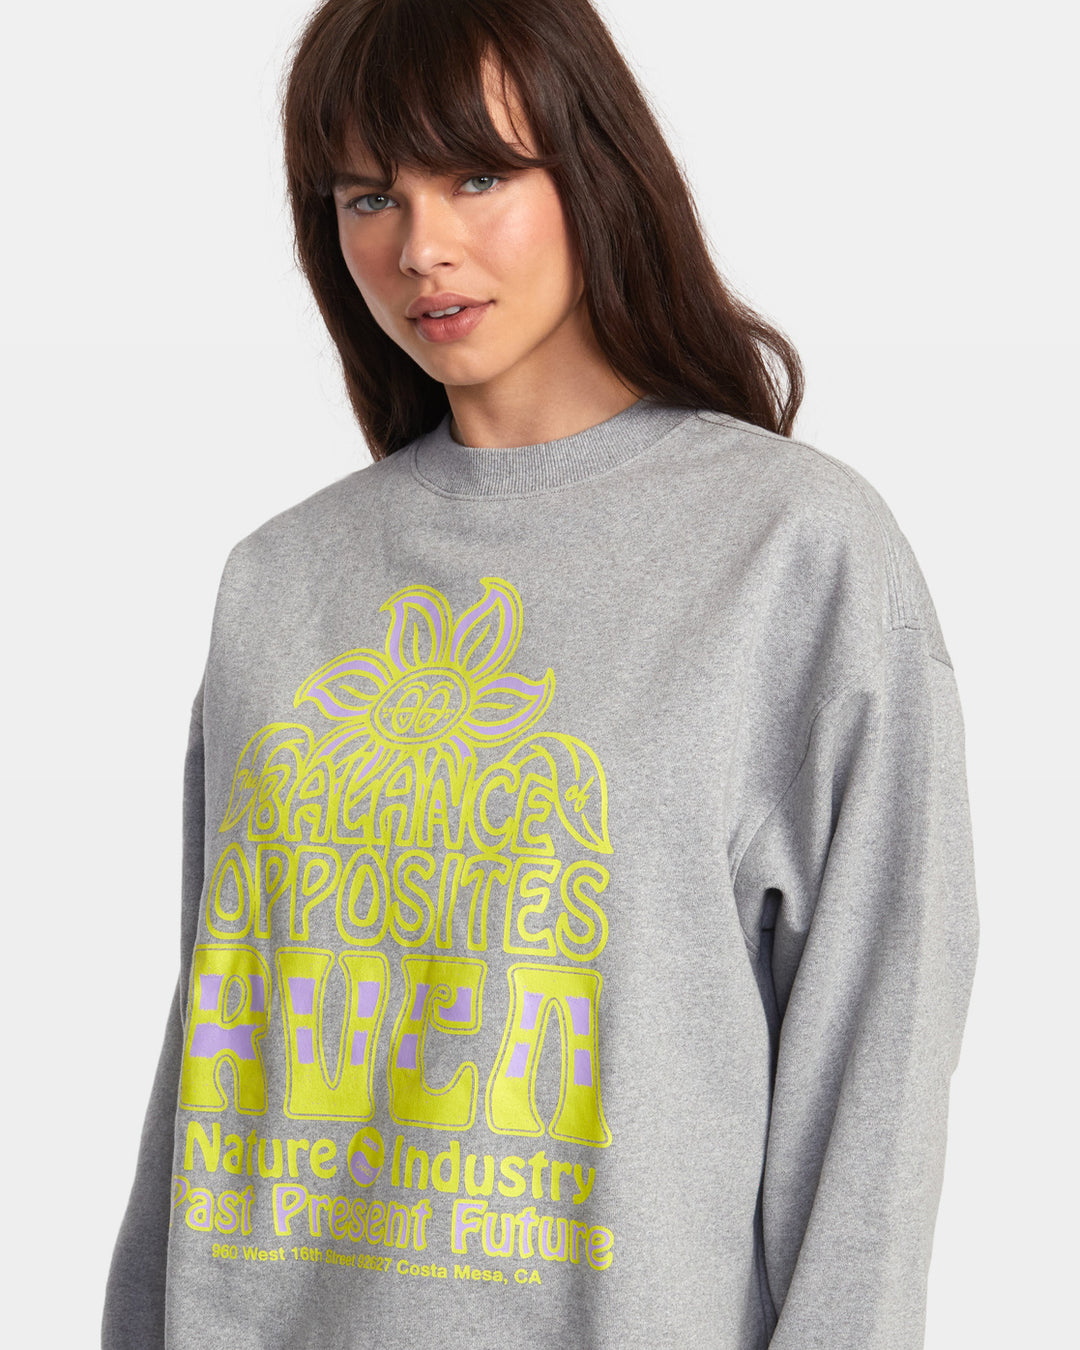 RVCA Positive Growth Sweatshirt - Heather Gray - Sun Diego Boardshop